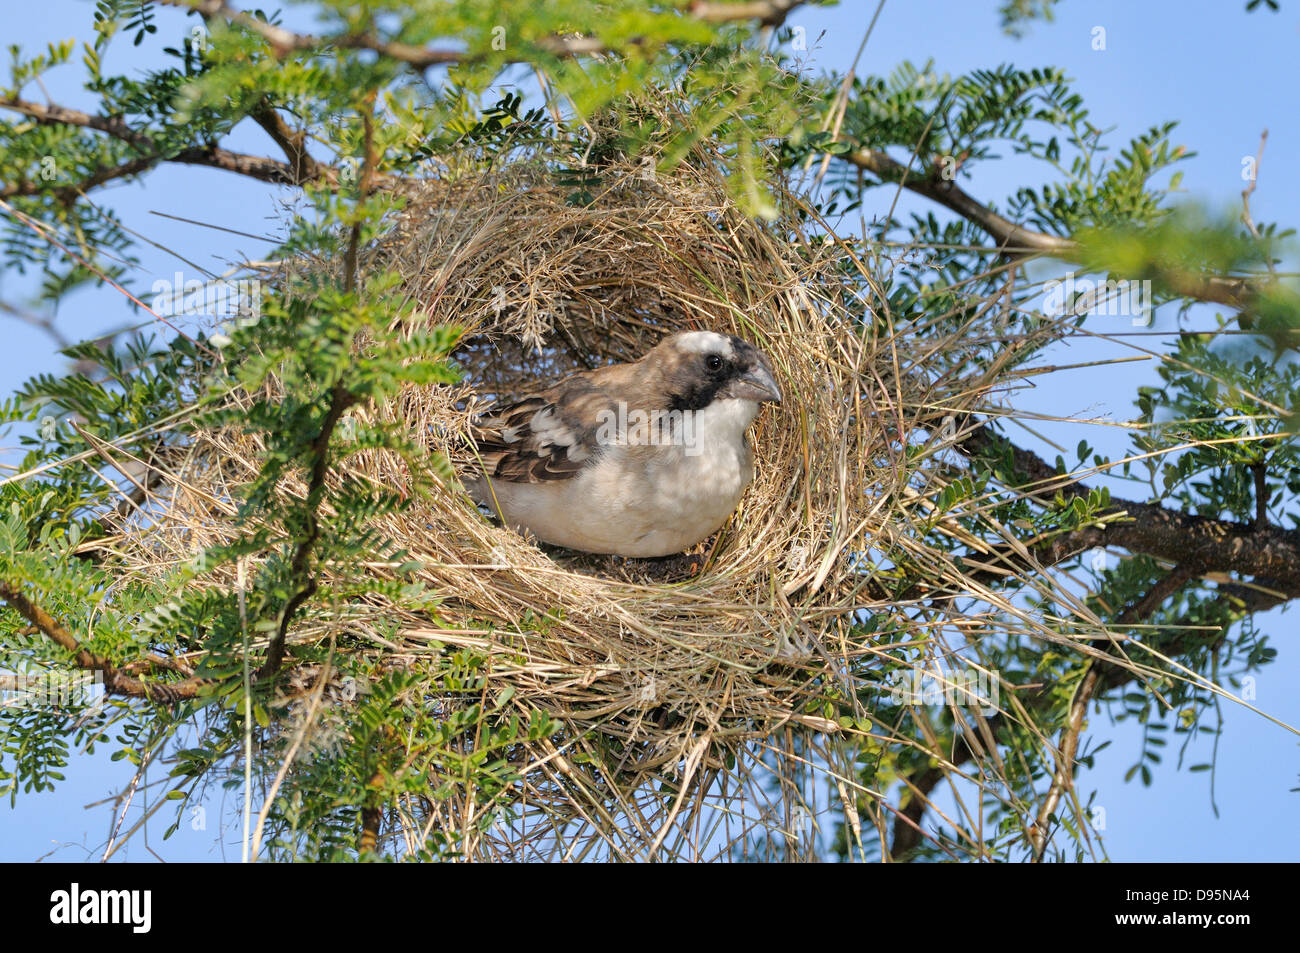 Bianco-browed Sparrow-Weaver Plocepasser mahali edificio nest fotografati a Mountain Zebra National Park, Sud Africa Foto Stock